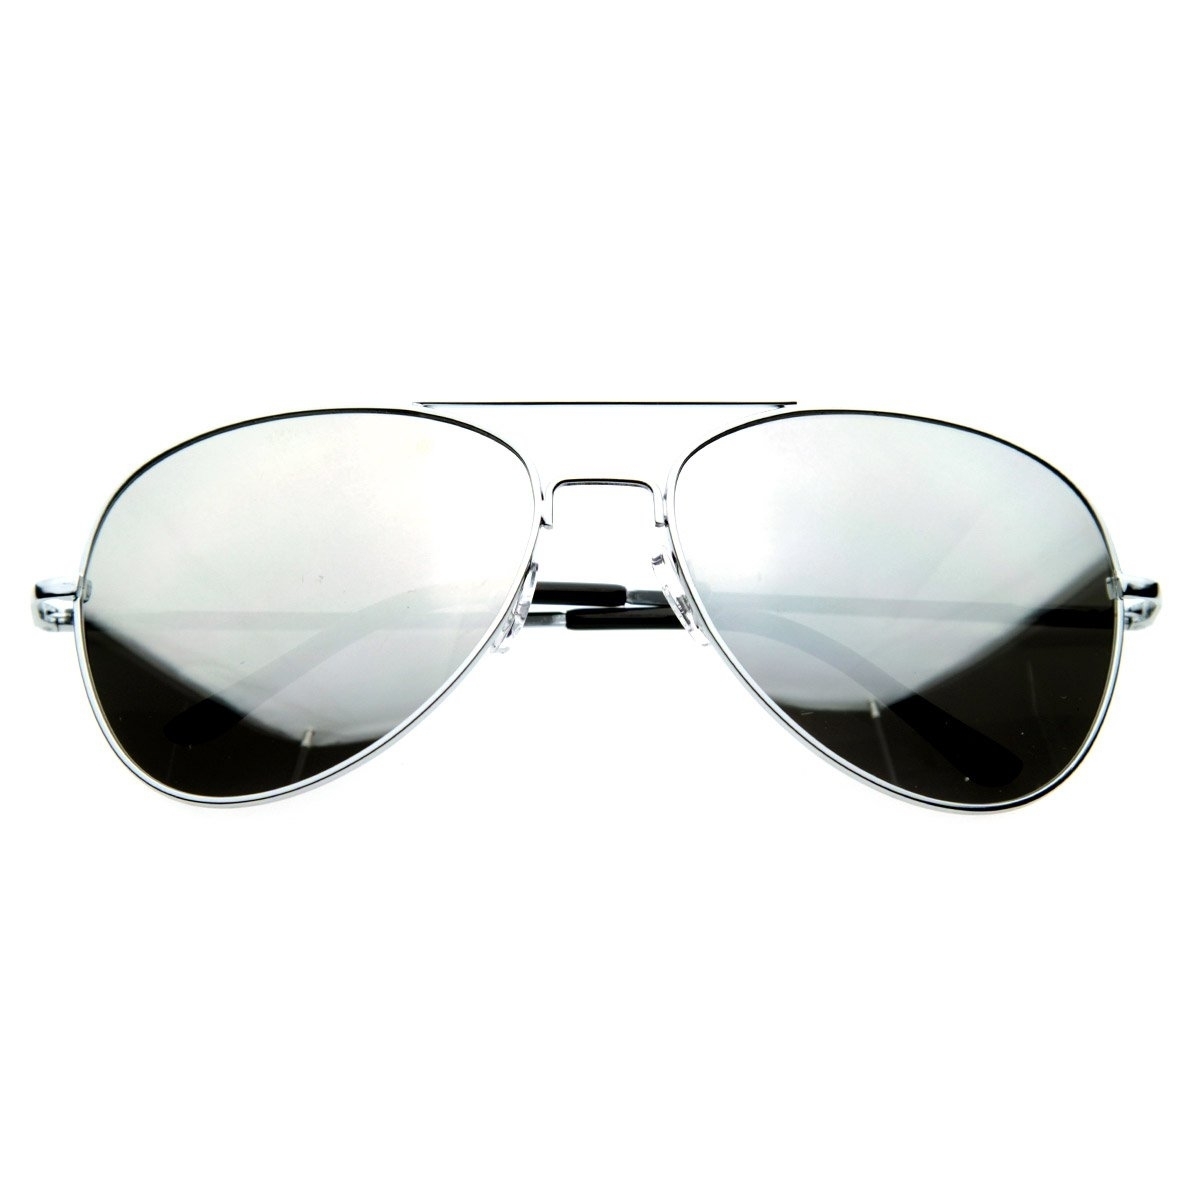 Premium Mirrored Aviator Top Gun Sunglasses W/ Spring Loaded Temples - Silver Each